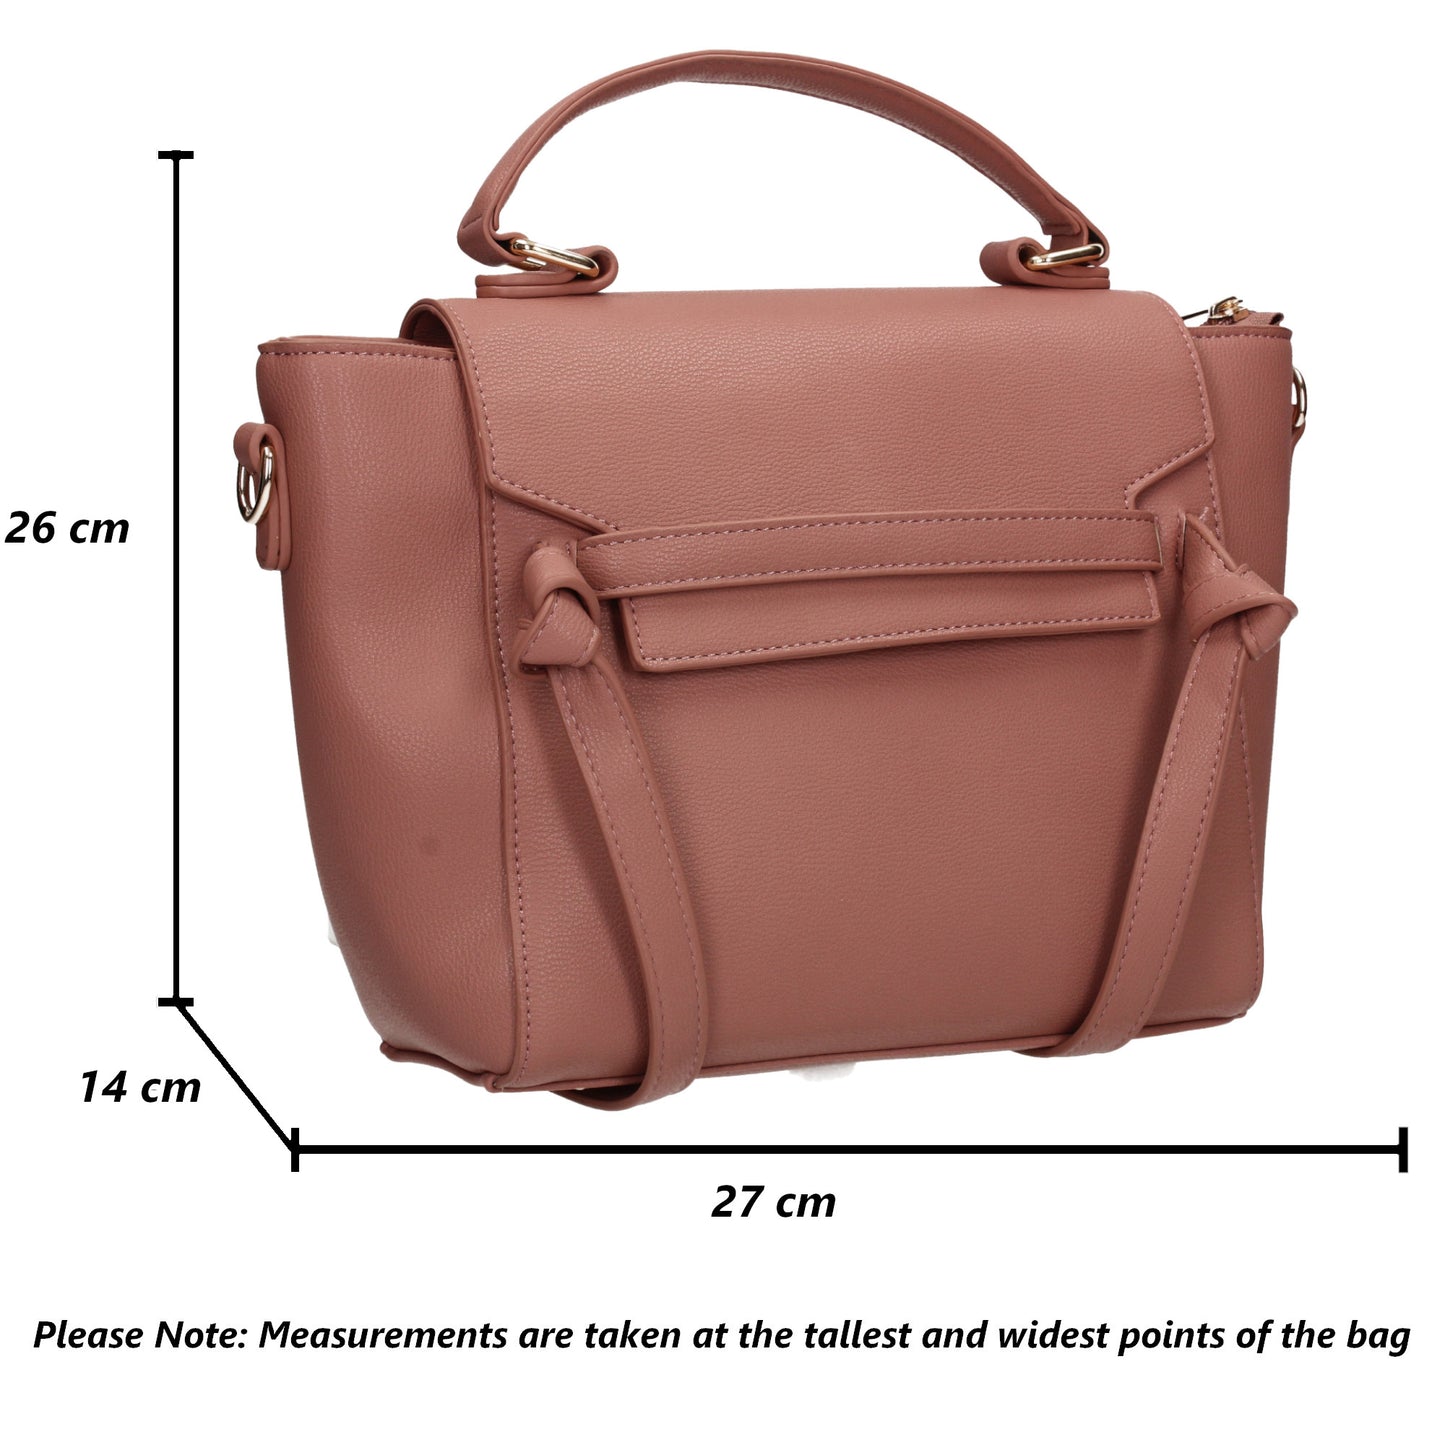 Buy your Juana Handbag Dark Pink Today! Buy with confidence from Swankyswans